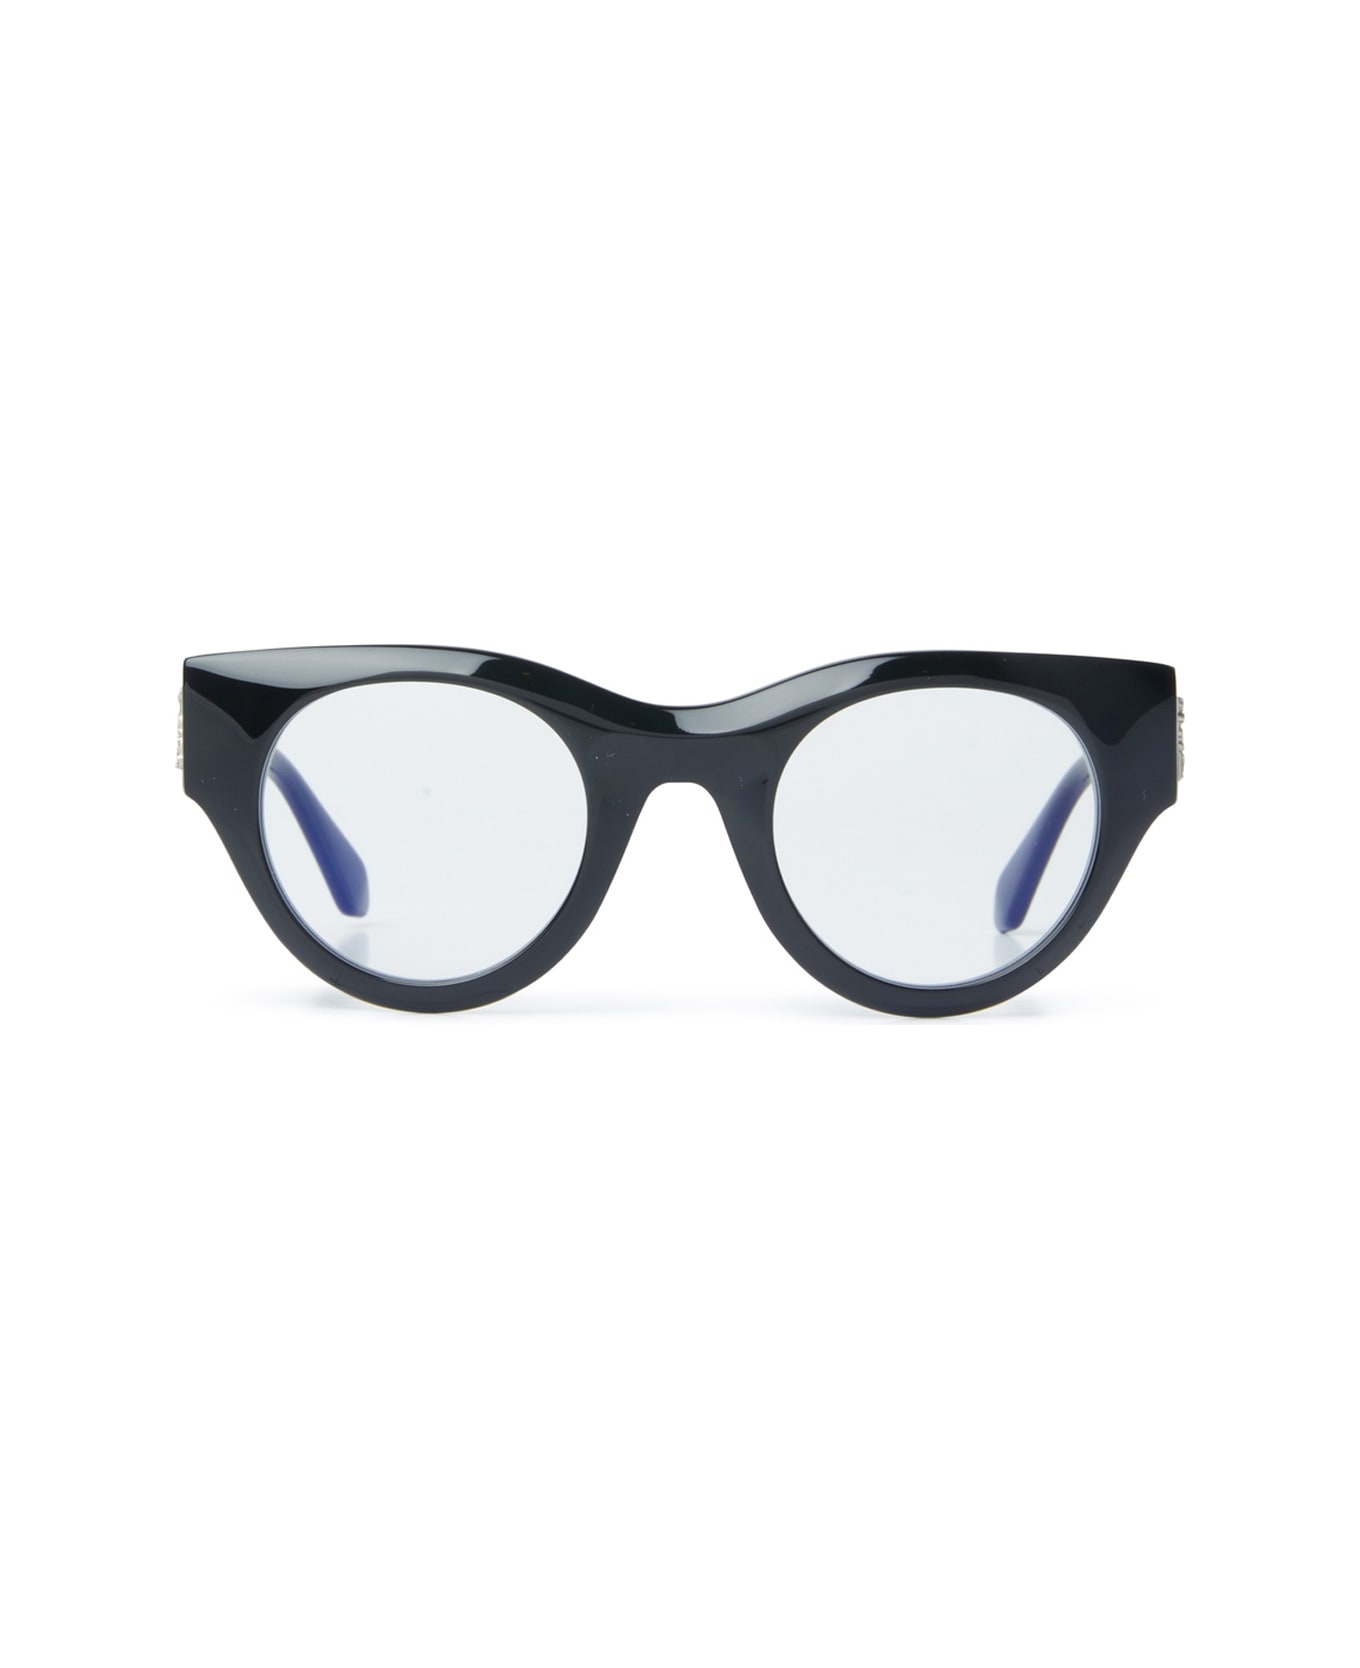 Off-White Optical Style 13 Glasses - Nero